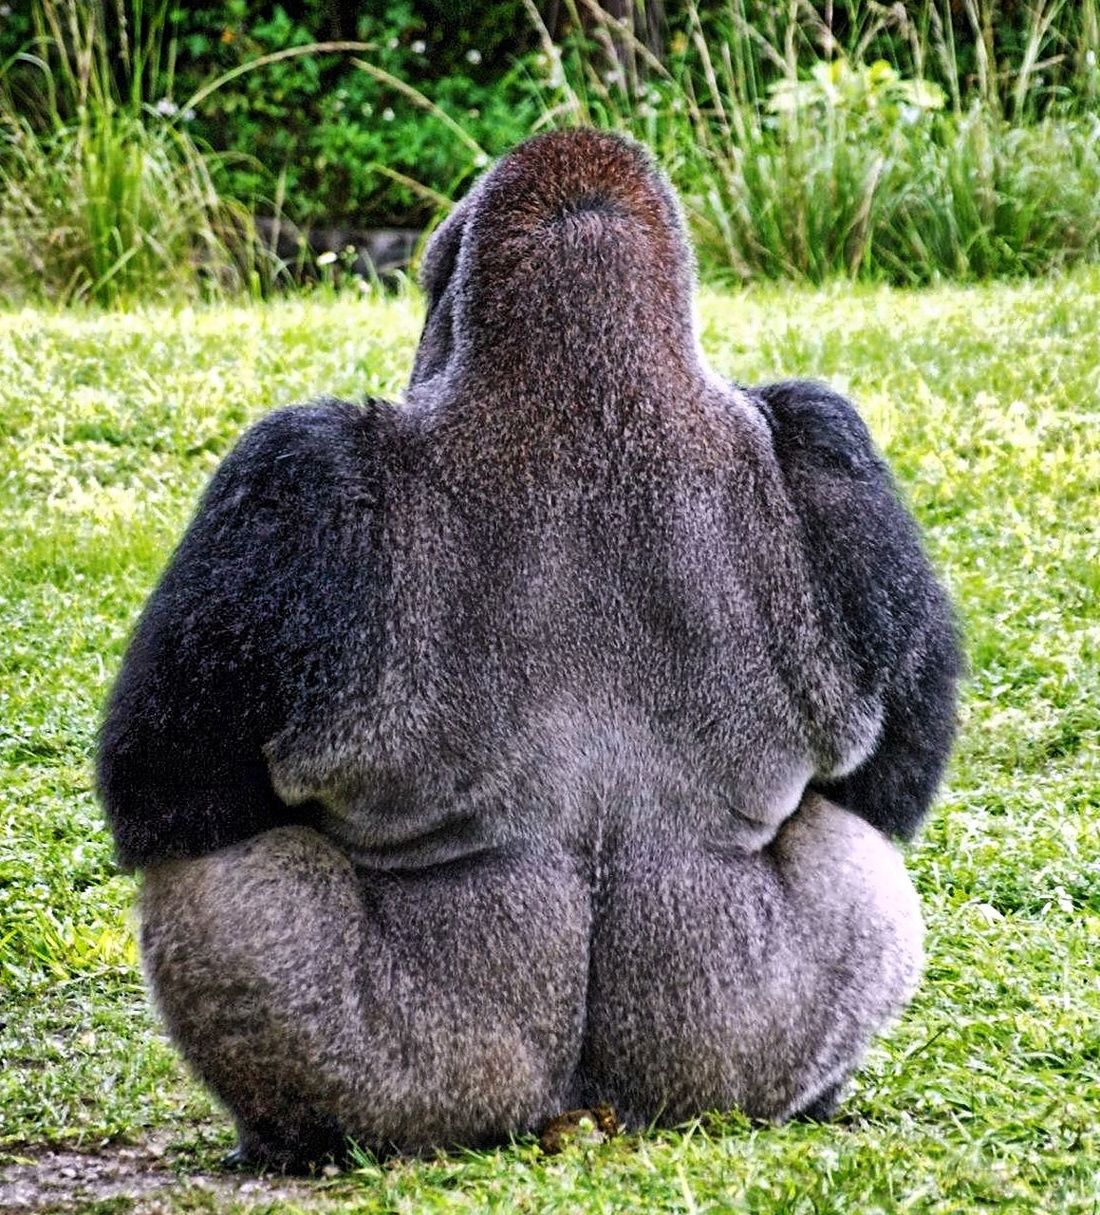 Rear view of gorilla sitting on grass